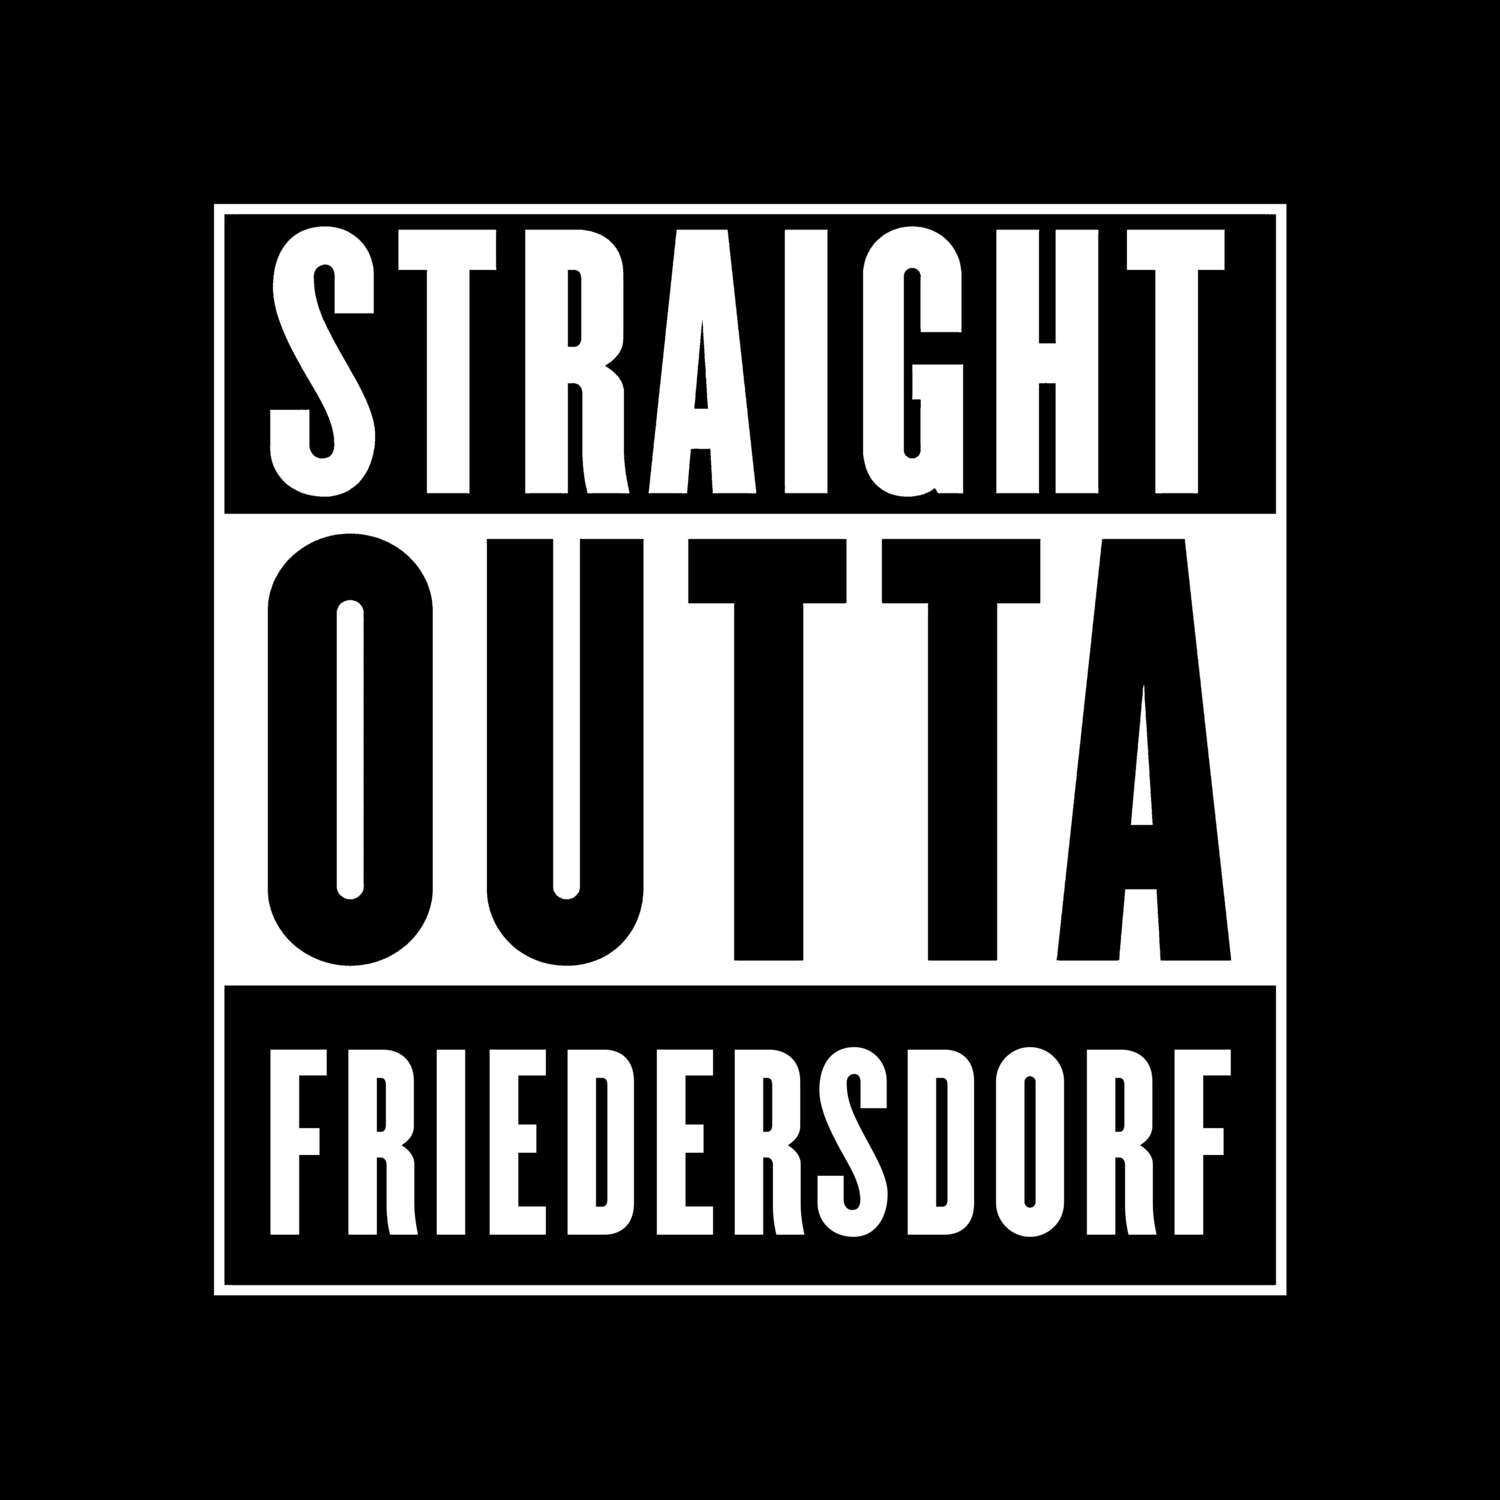 Friedersdorf T-Shirt »Straight Outta«